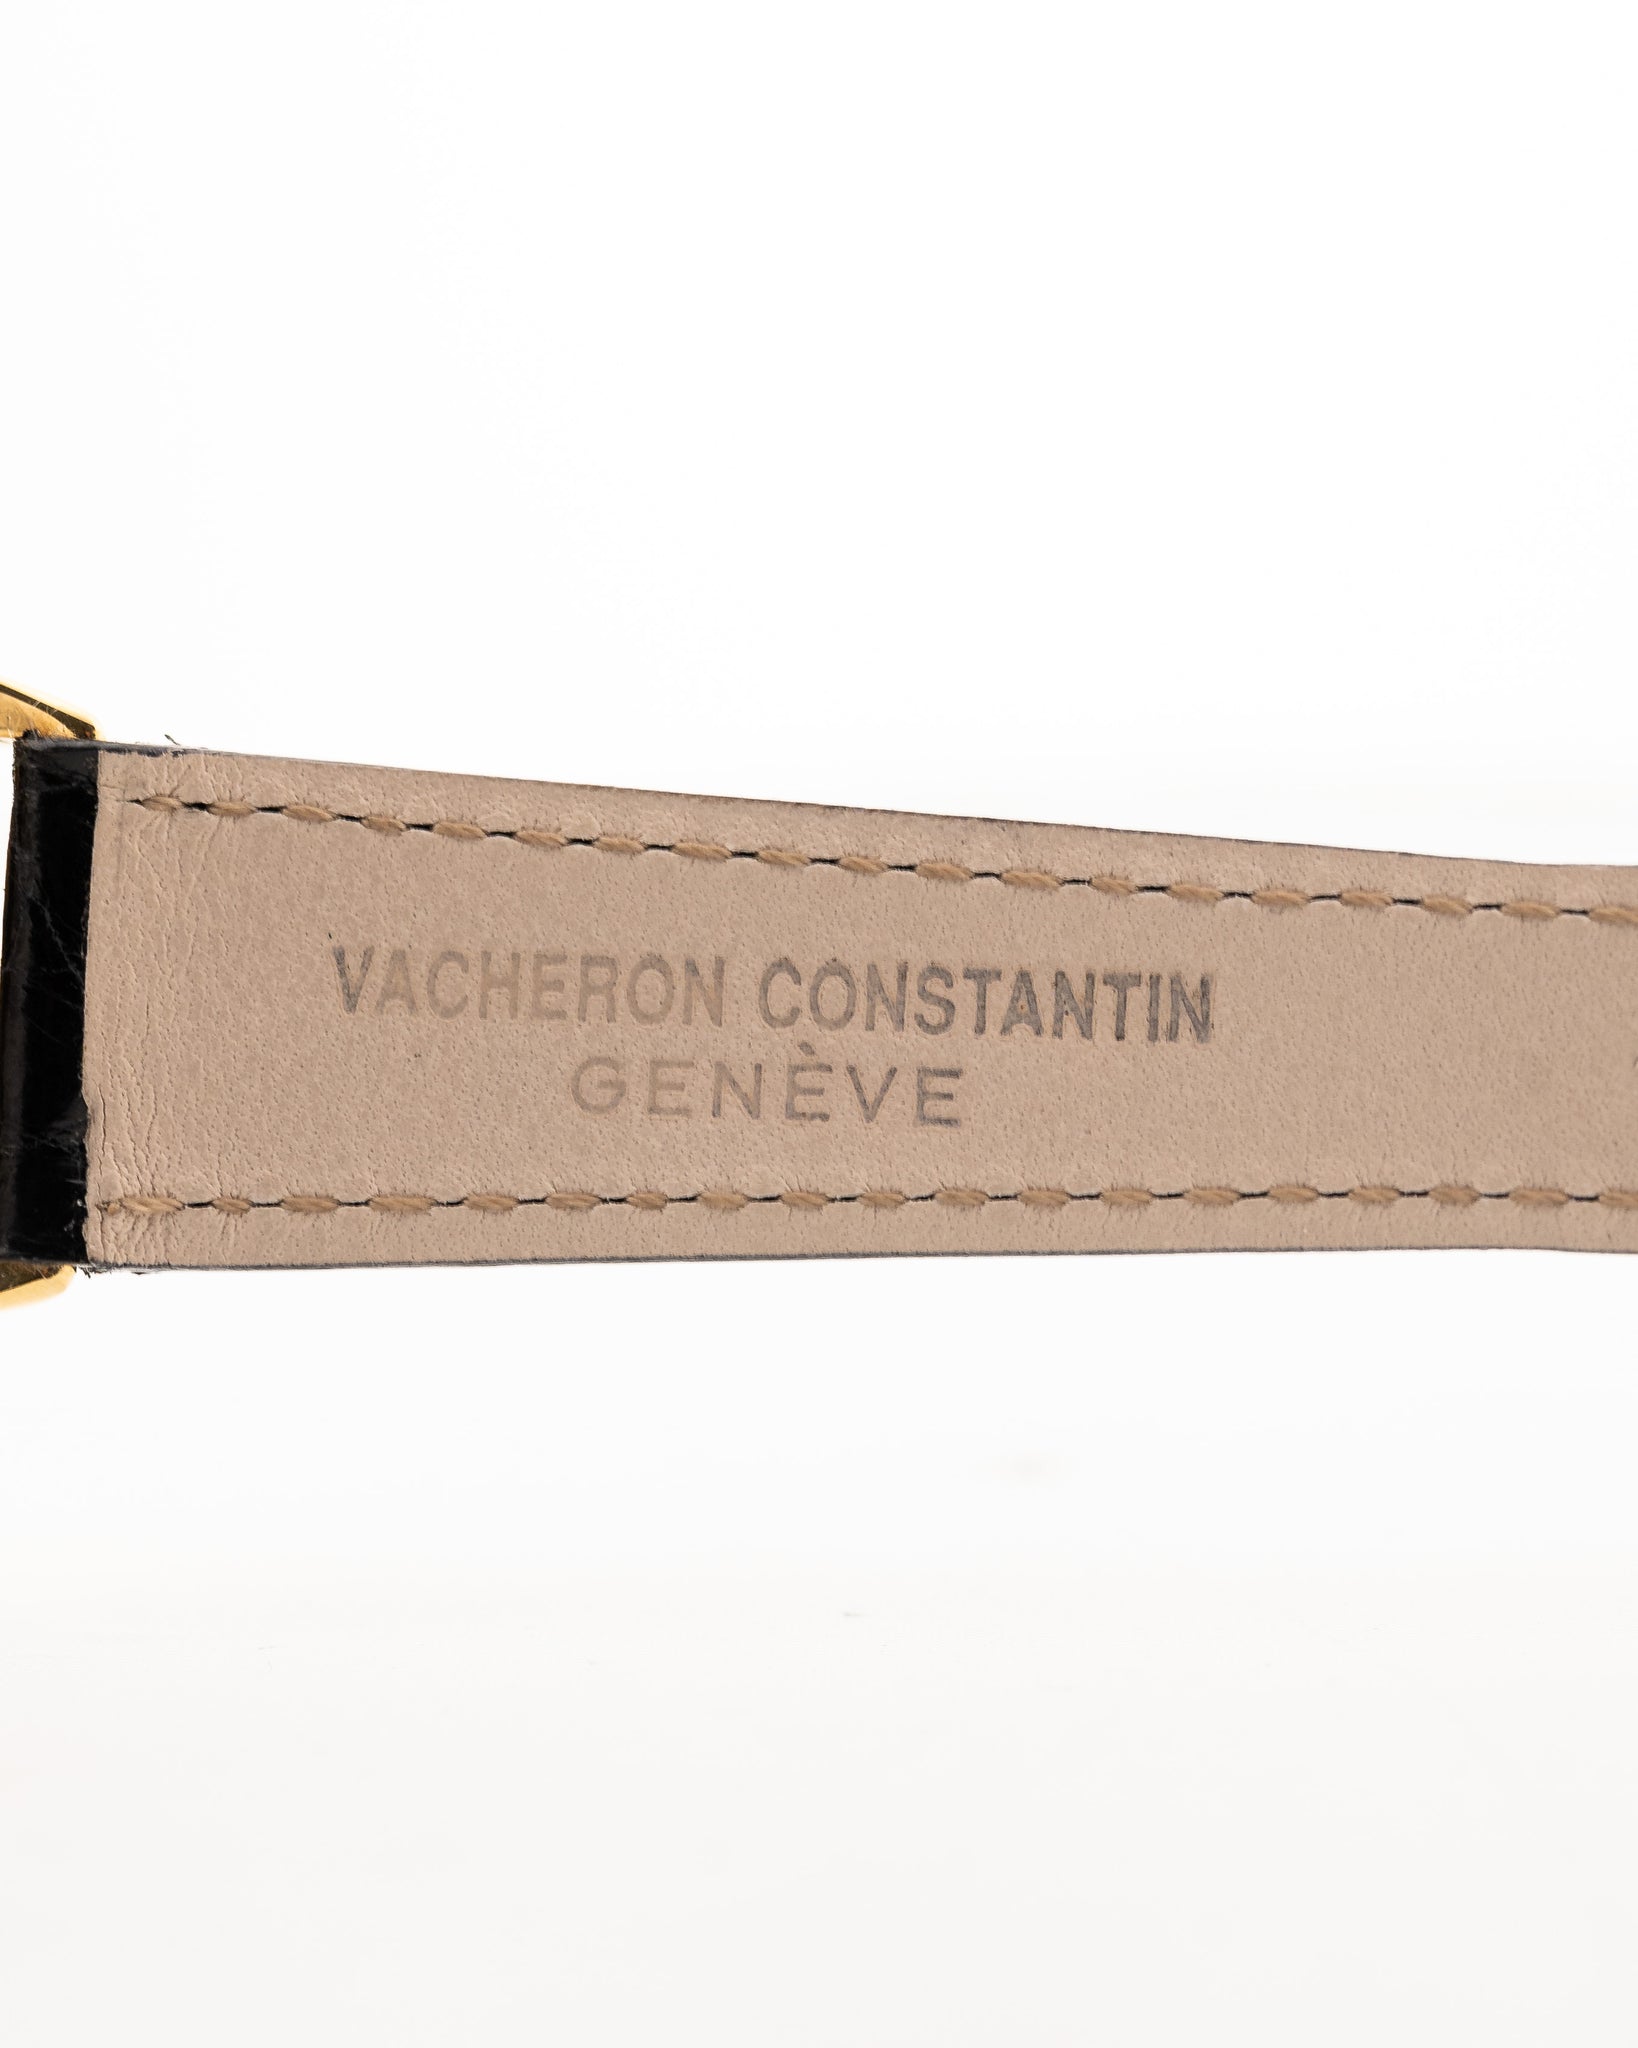 Vacheron Constantin Sub Second 18k 1955